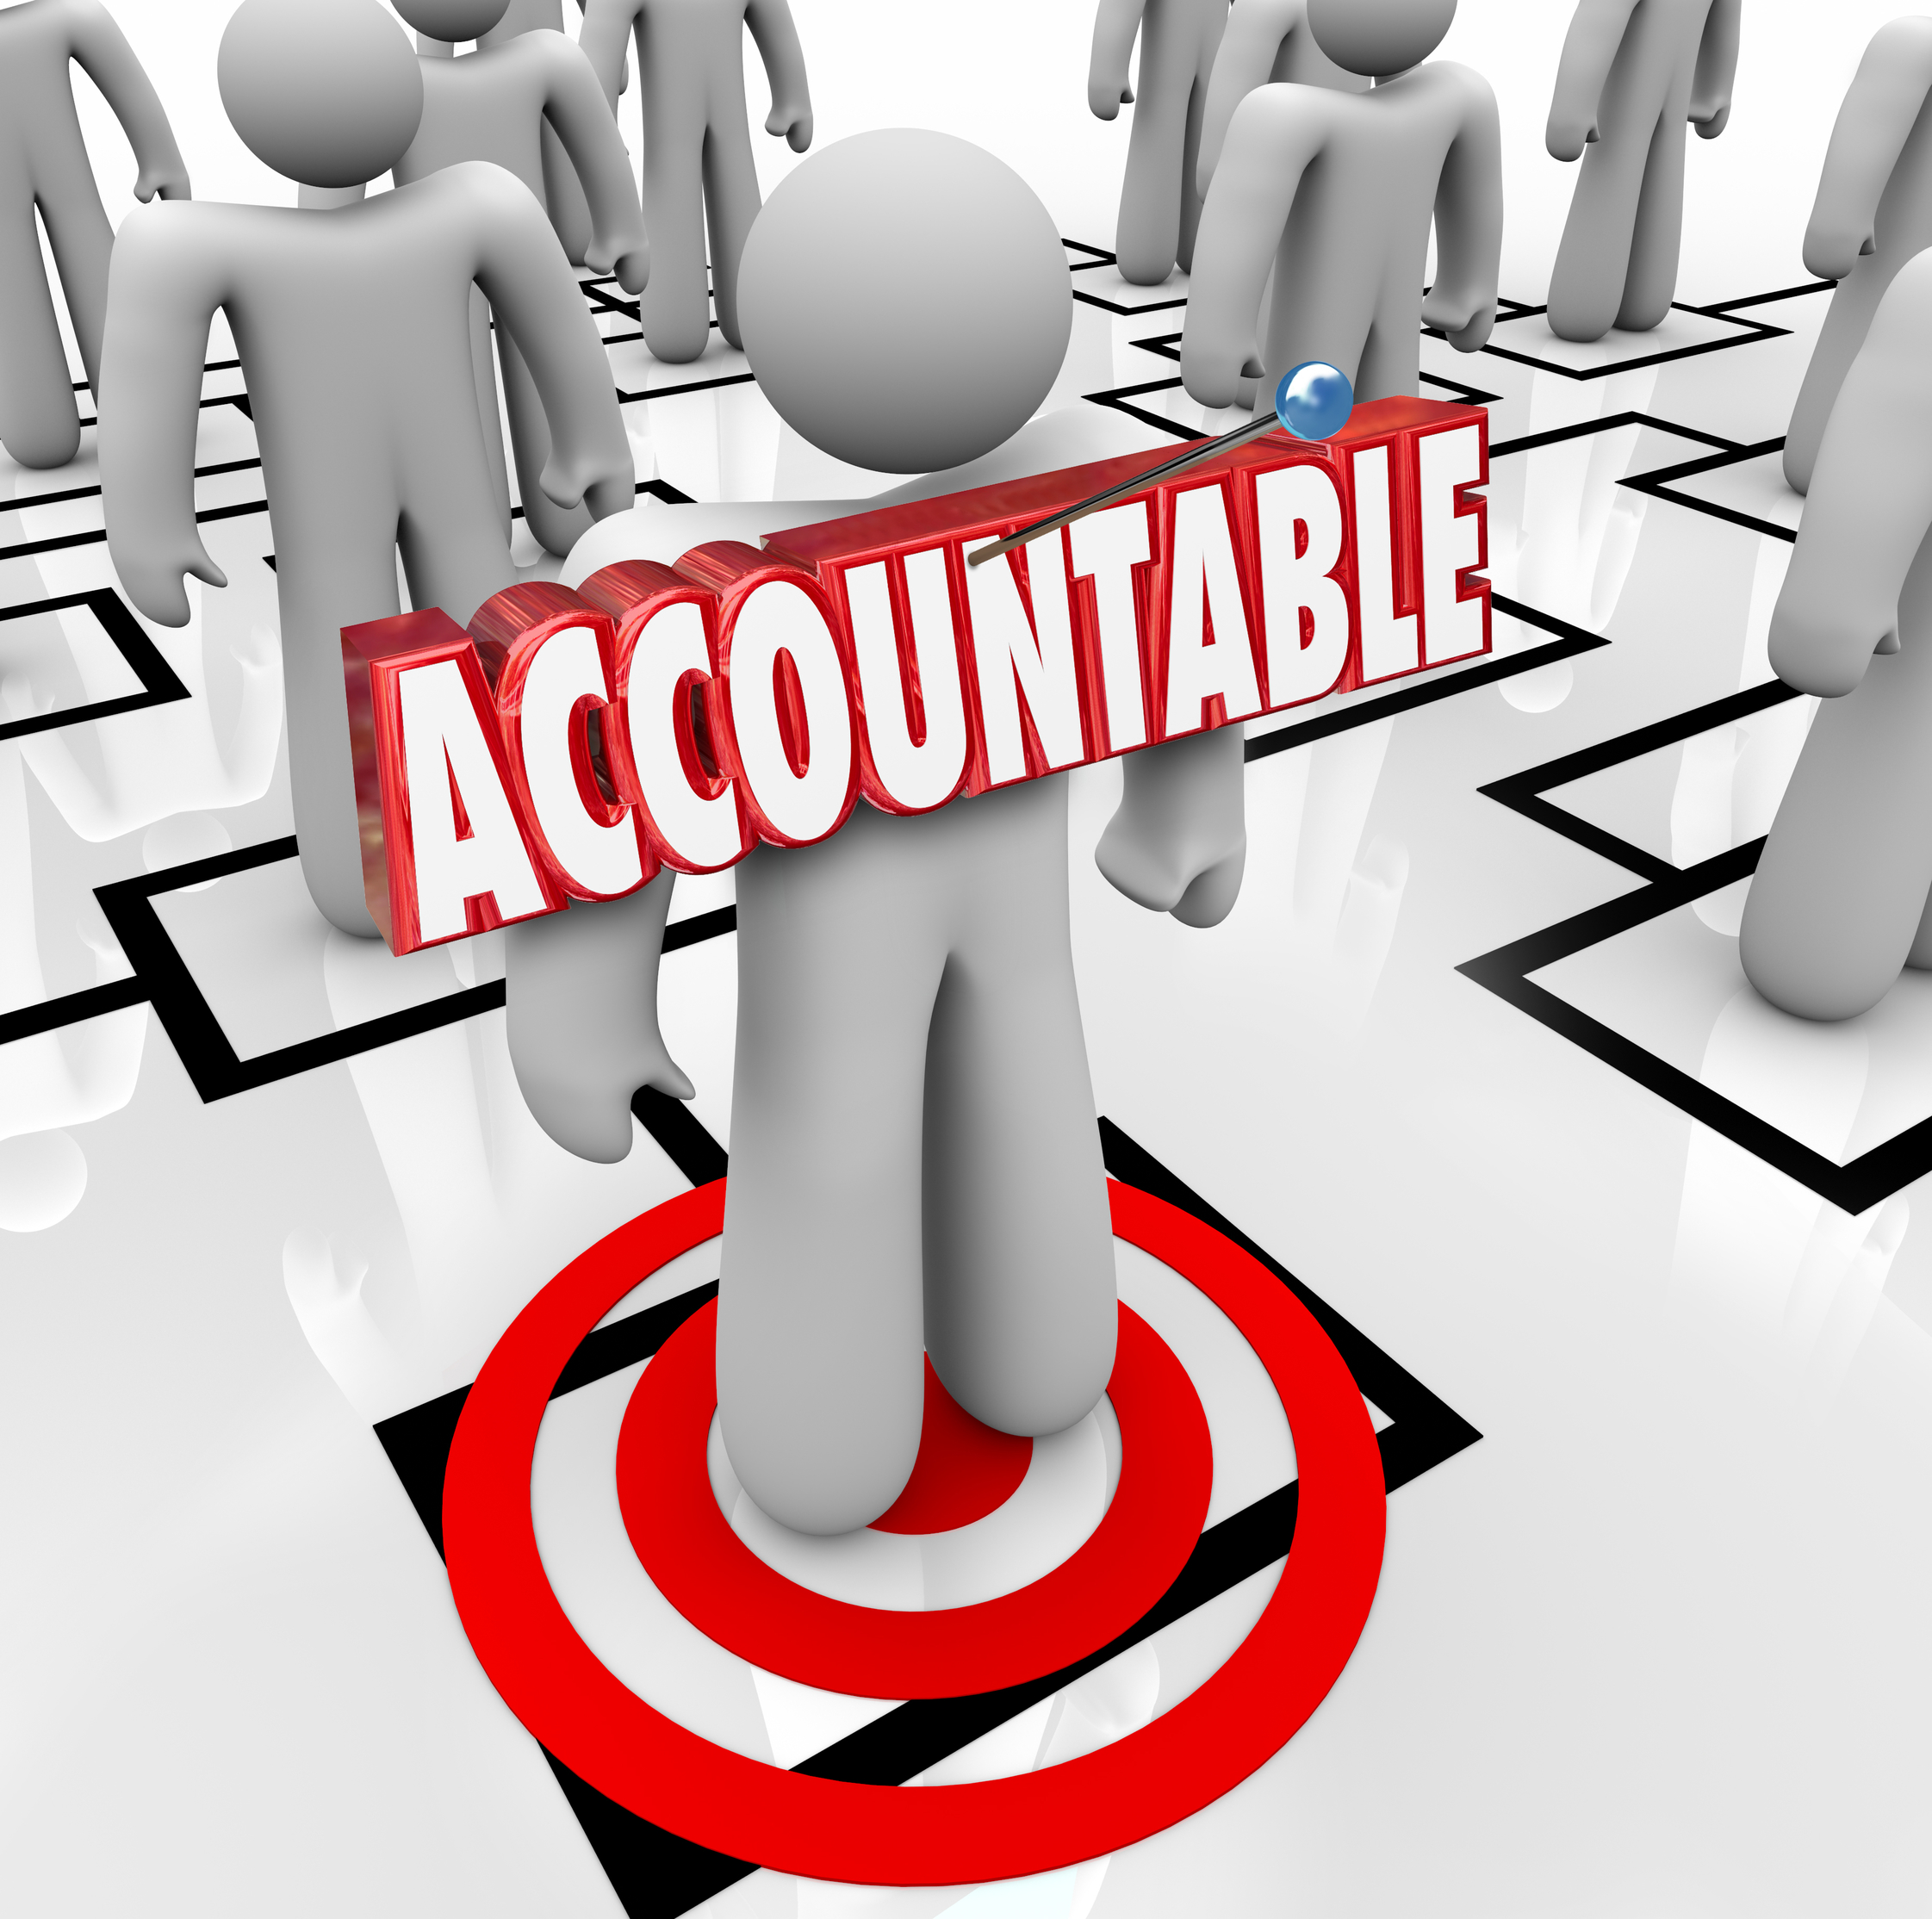 Accountability Chart Eos